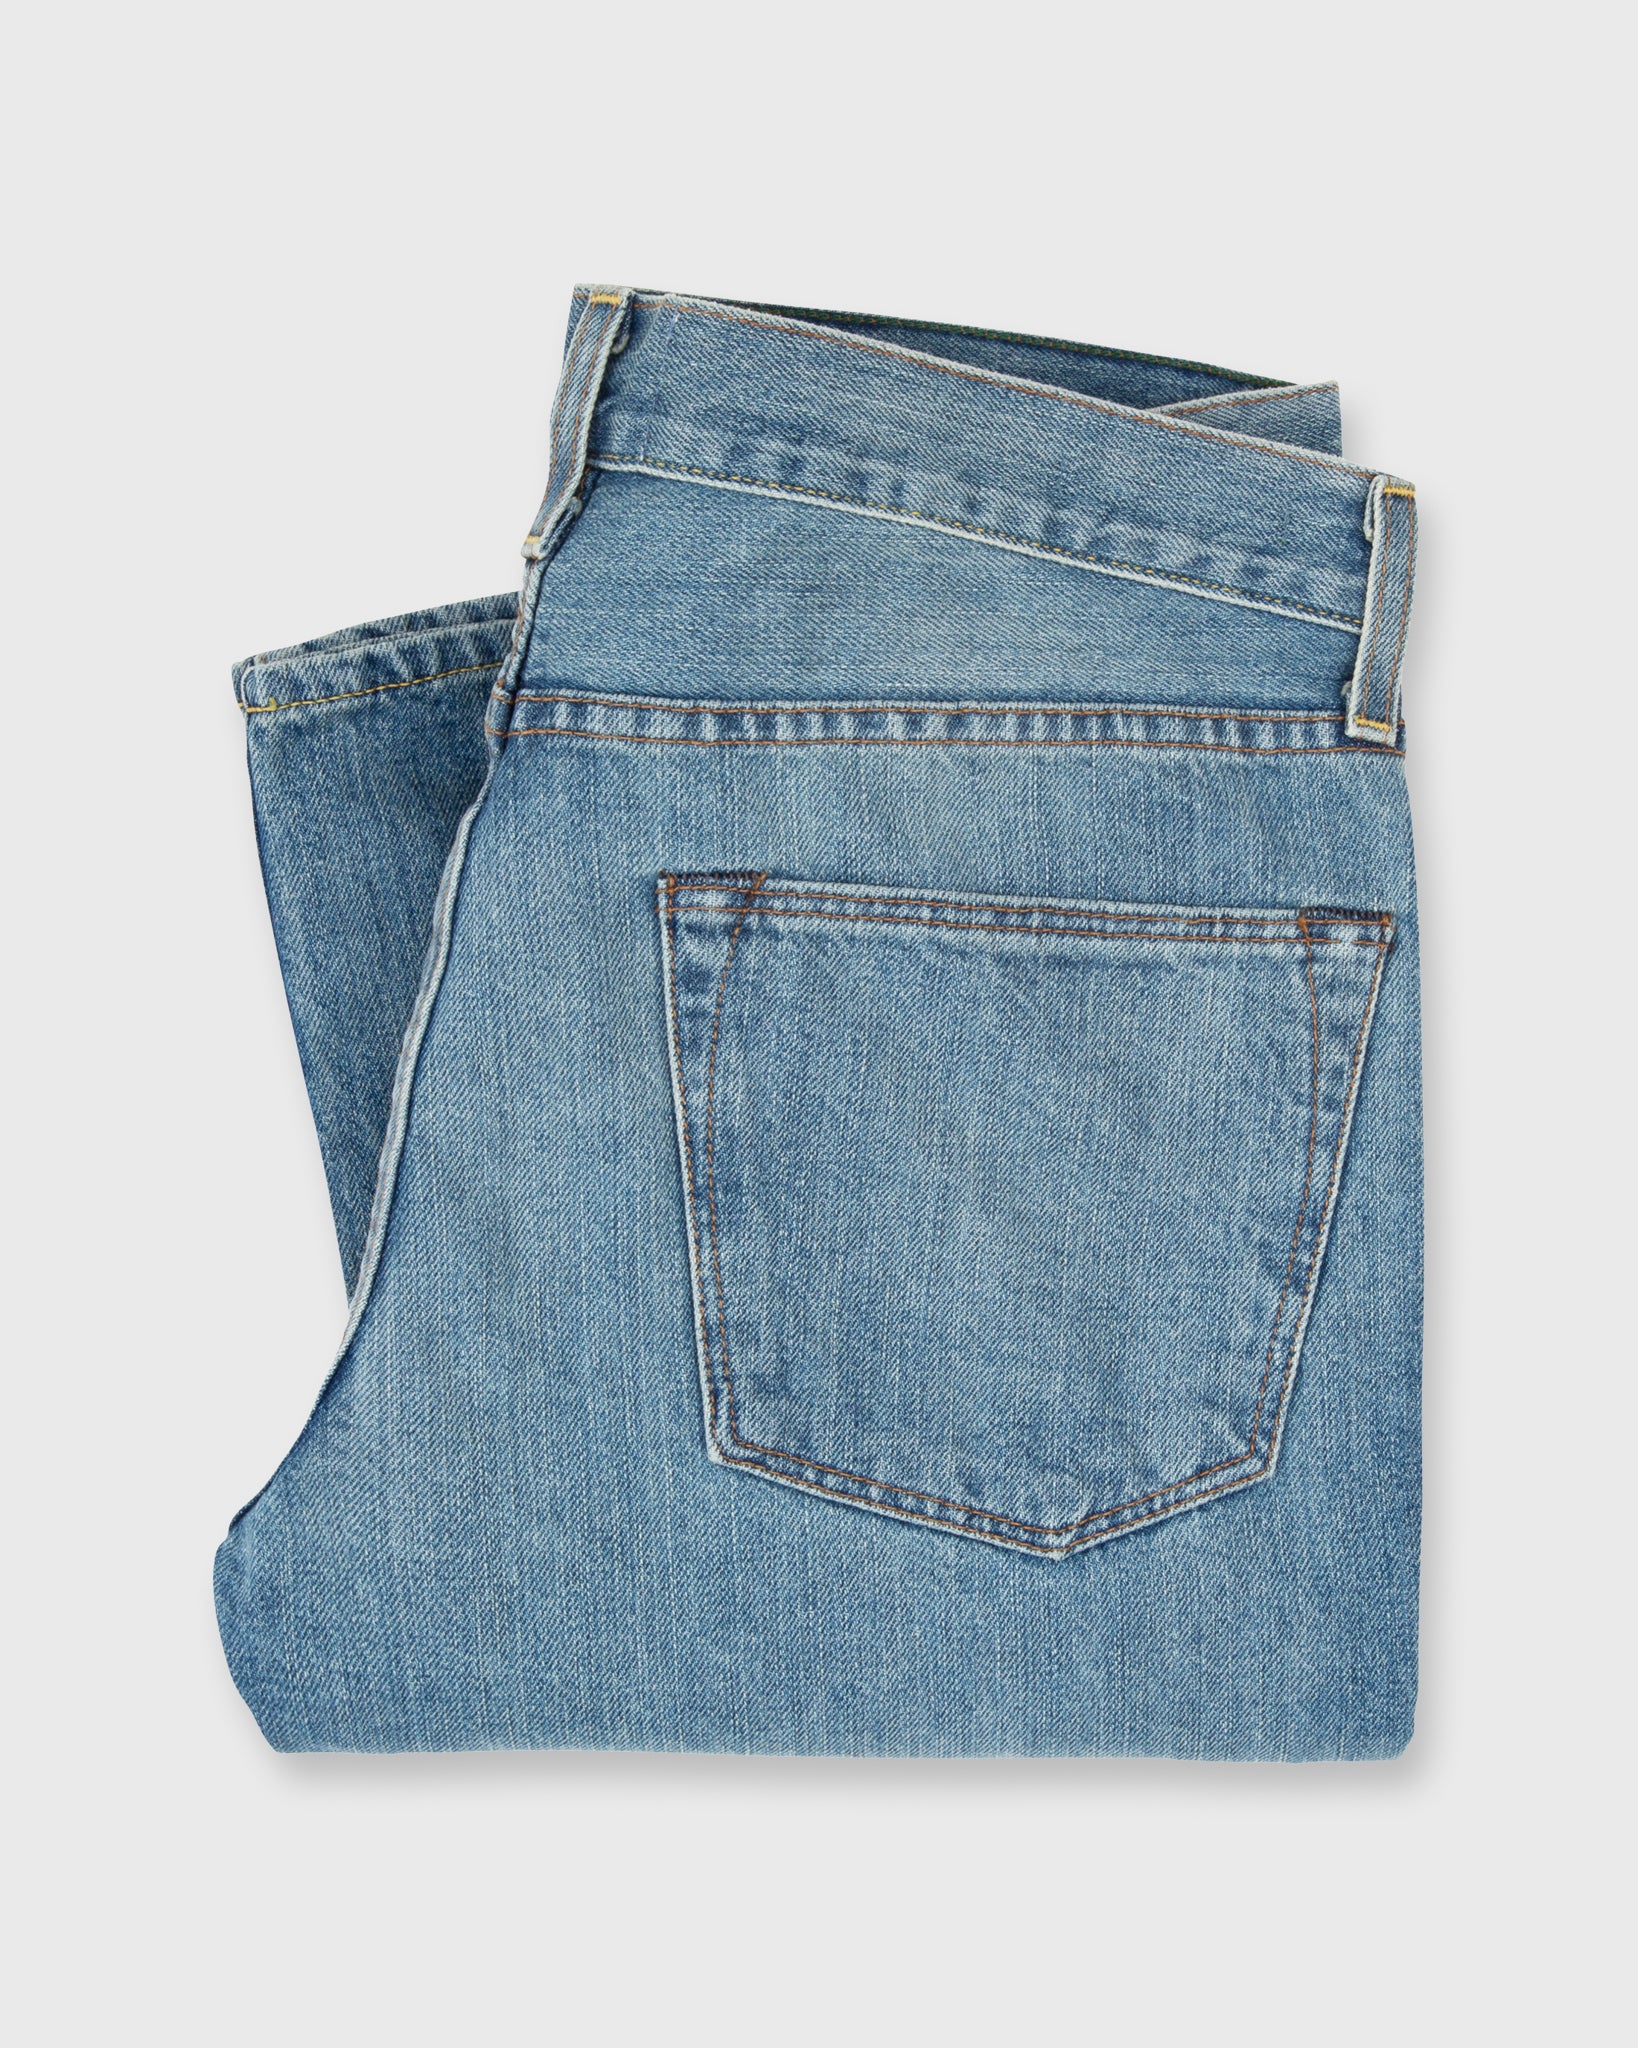 Slim Straight Jean in Non-Selvedge Light Wash Denim